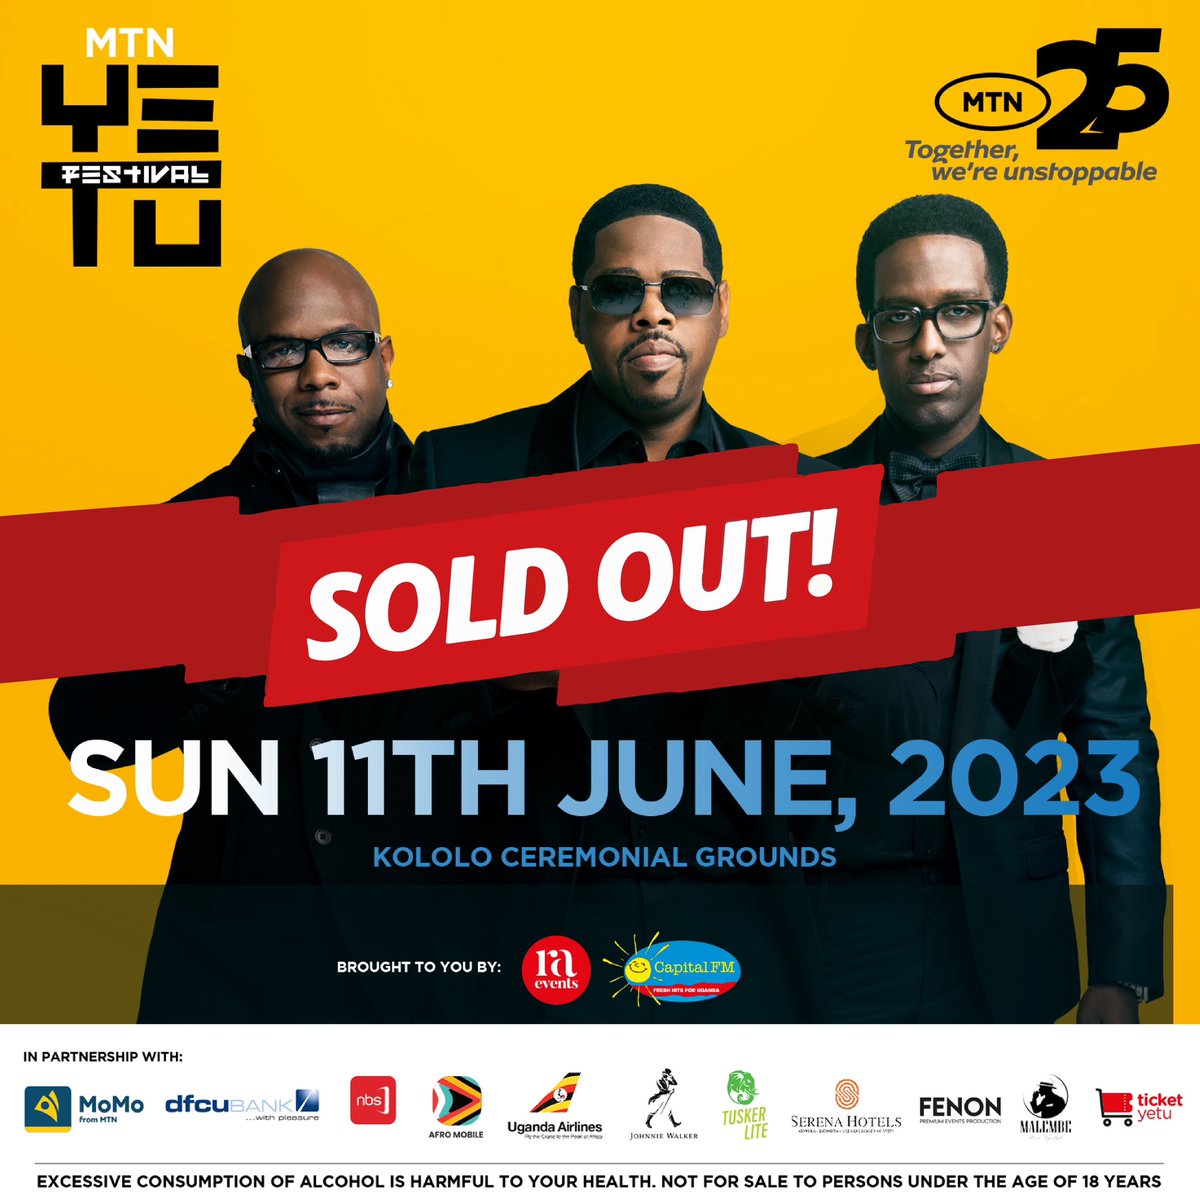 We are SOLD OUT! 

The @BoyzIIMen here. 

#BoyzIIMenInUganda 
#MTNYetuFestival 
#RadioAfricaEvents